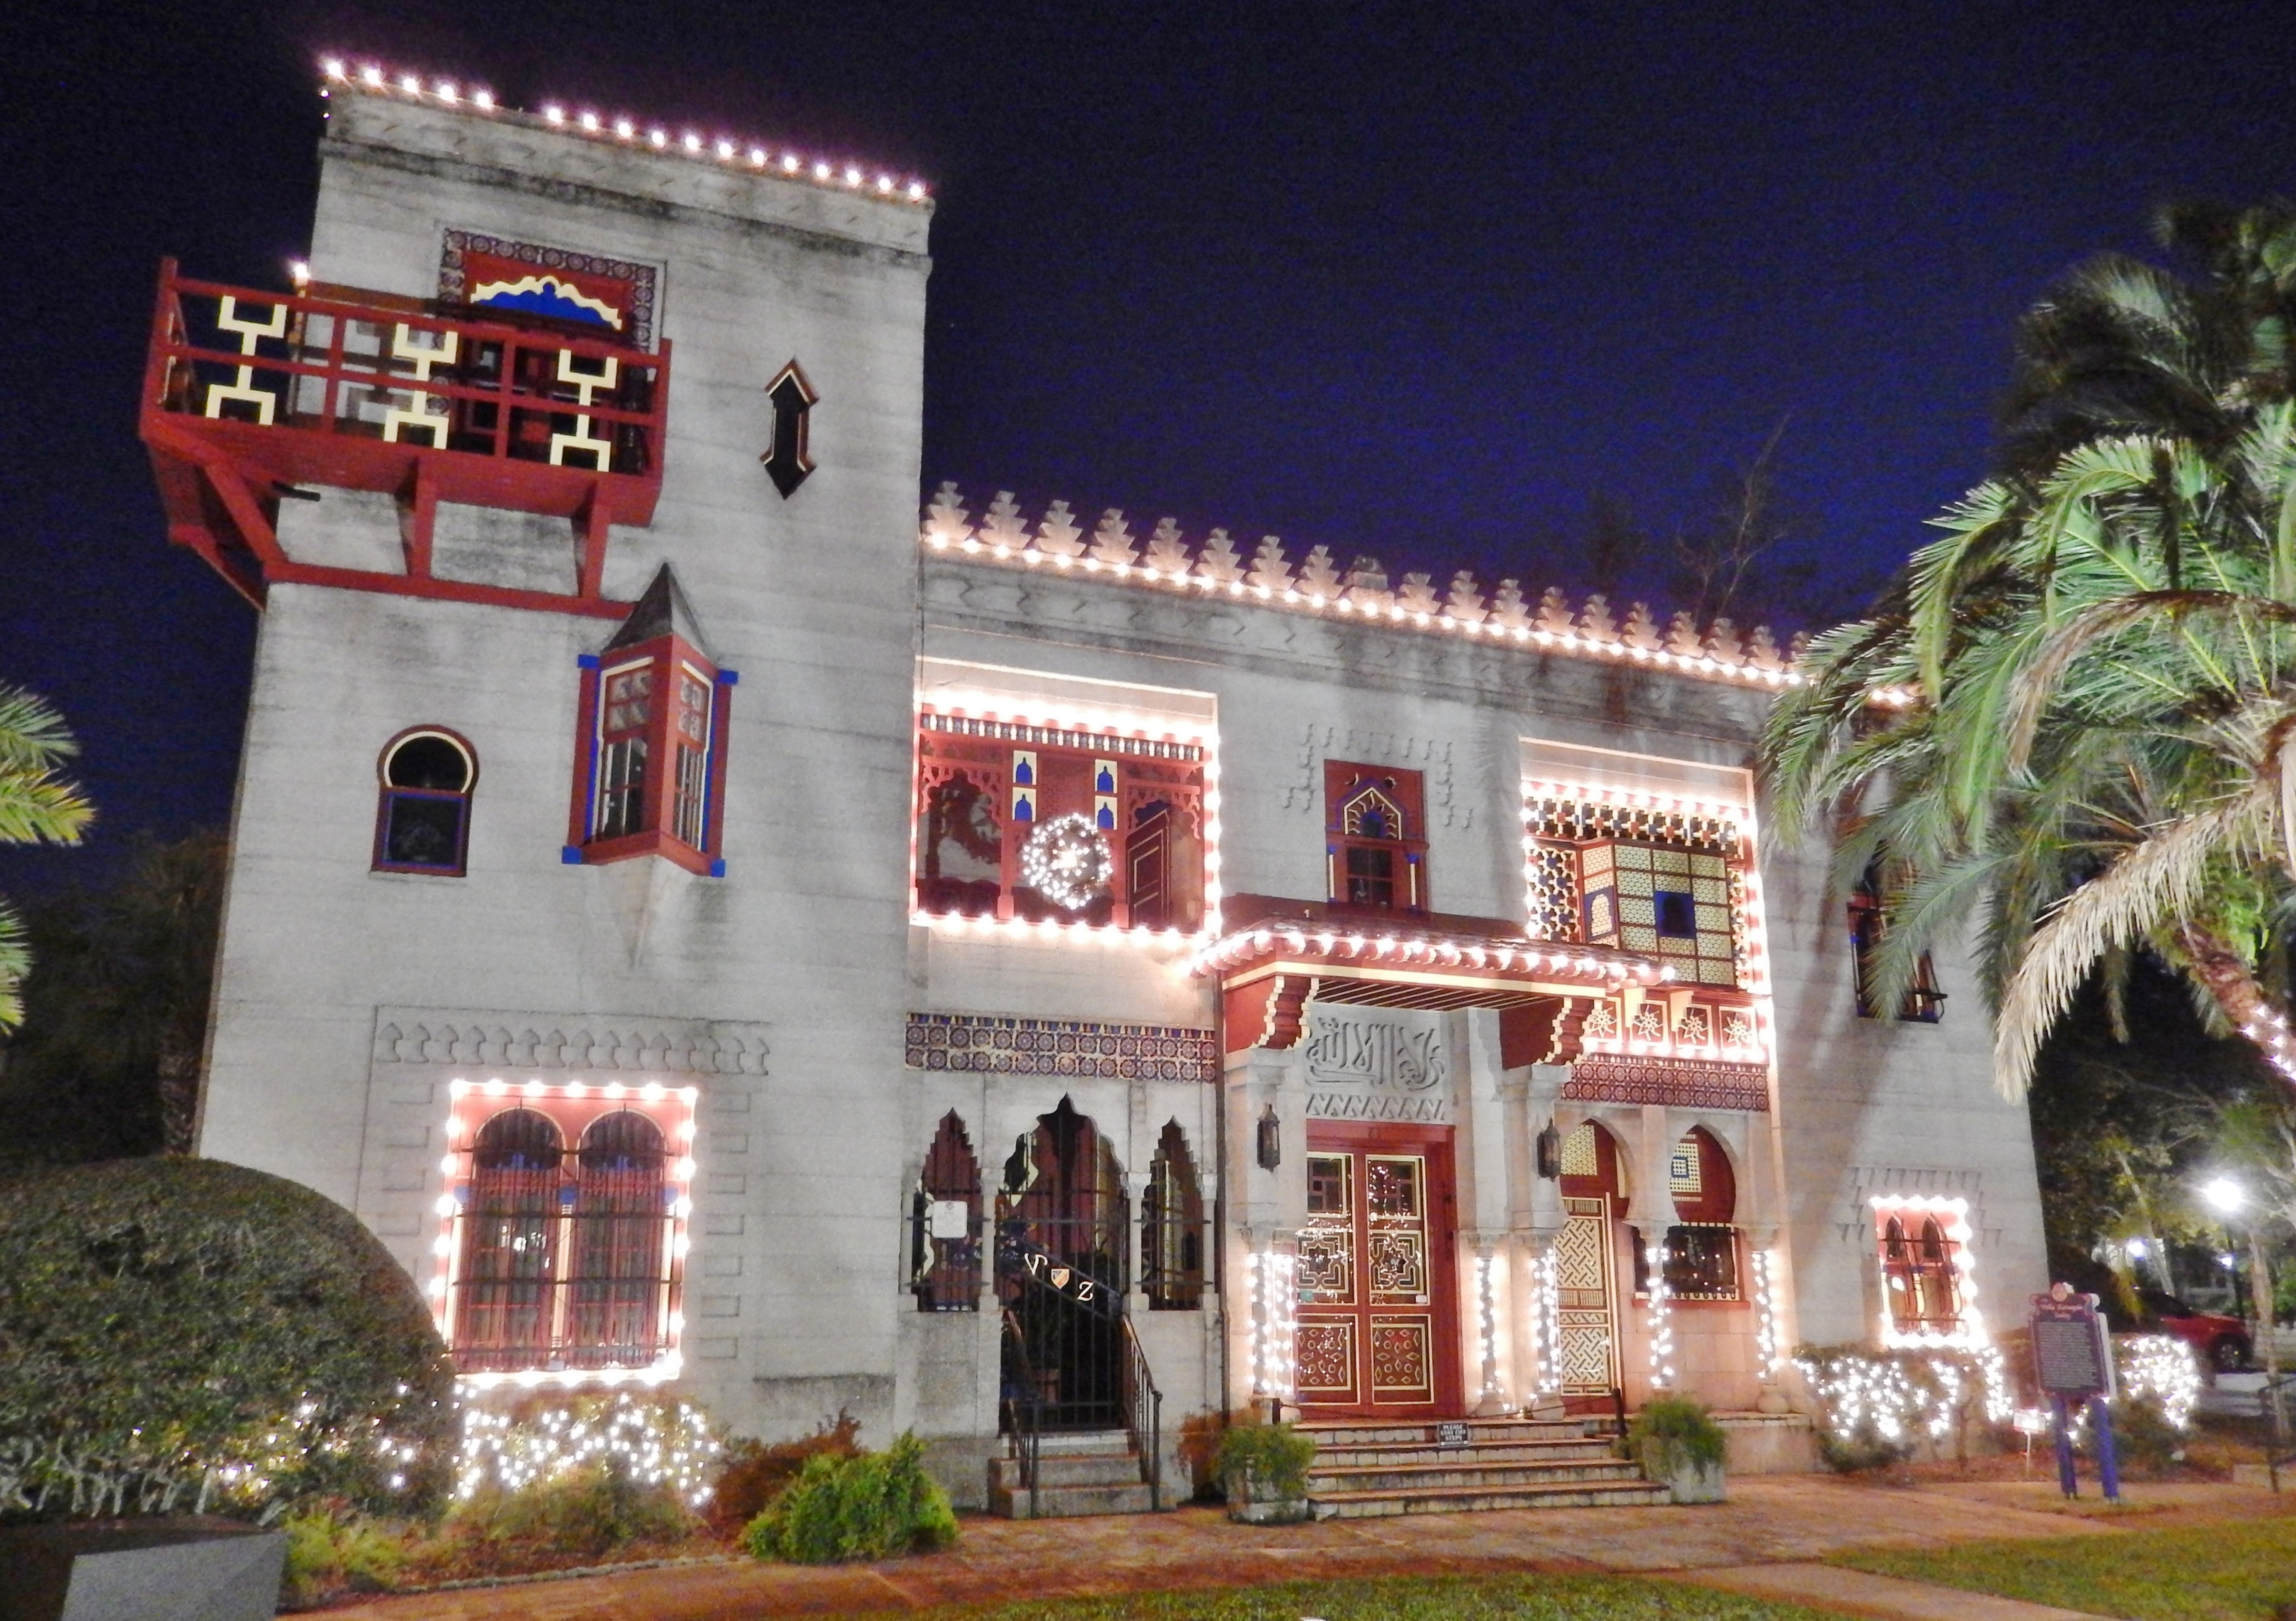 Villa Zorayda Christmas Lighting